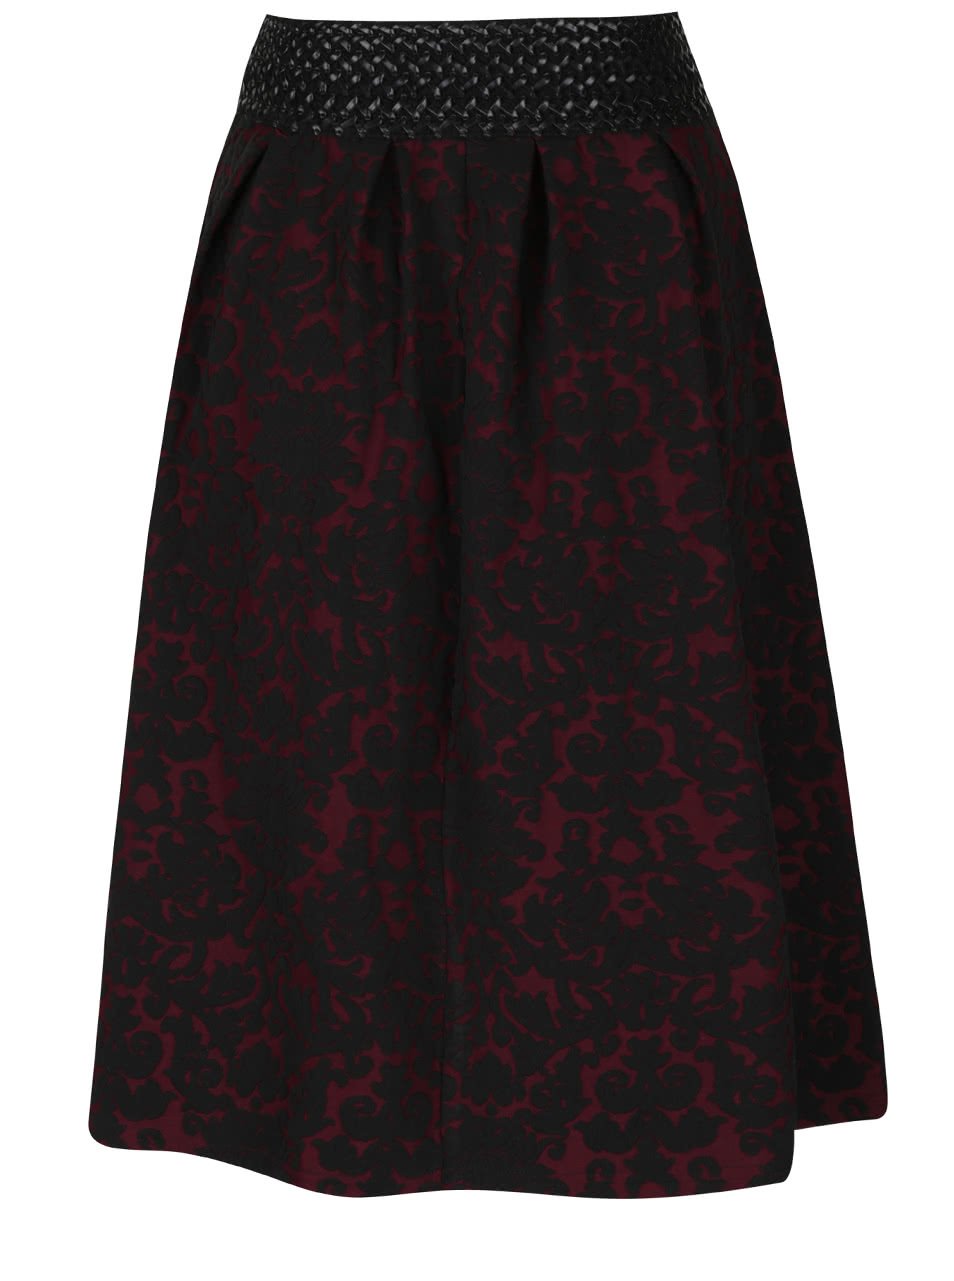 Černo-vínová vzorovaná sukně Alchymi